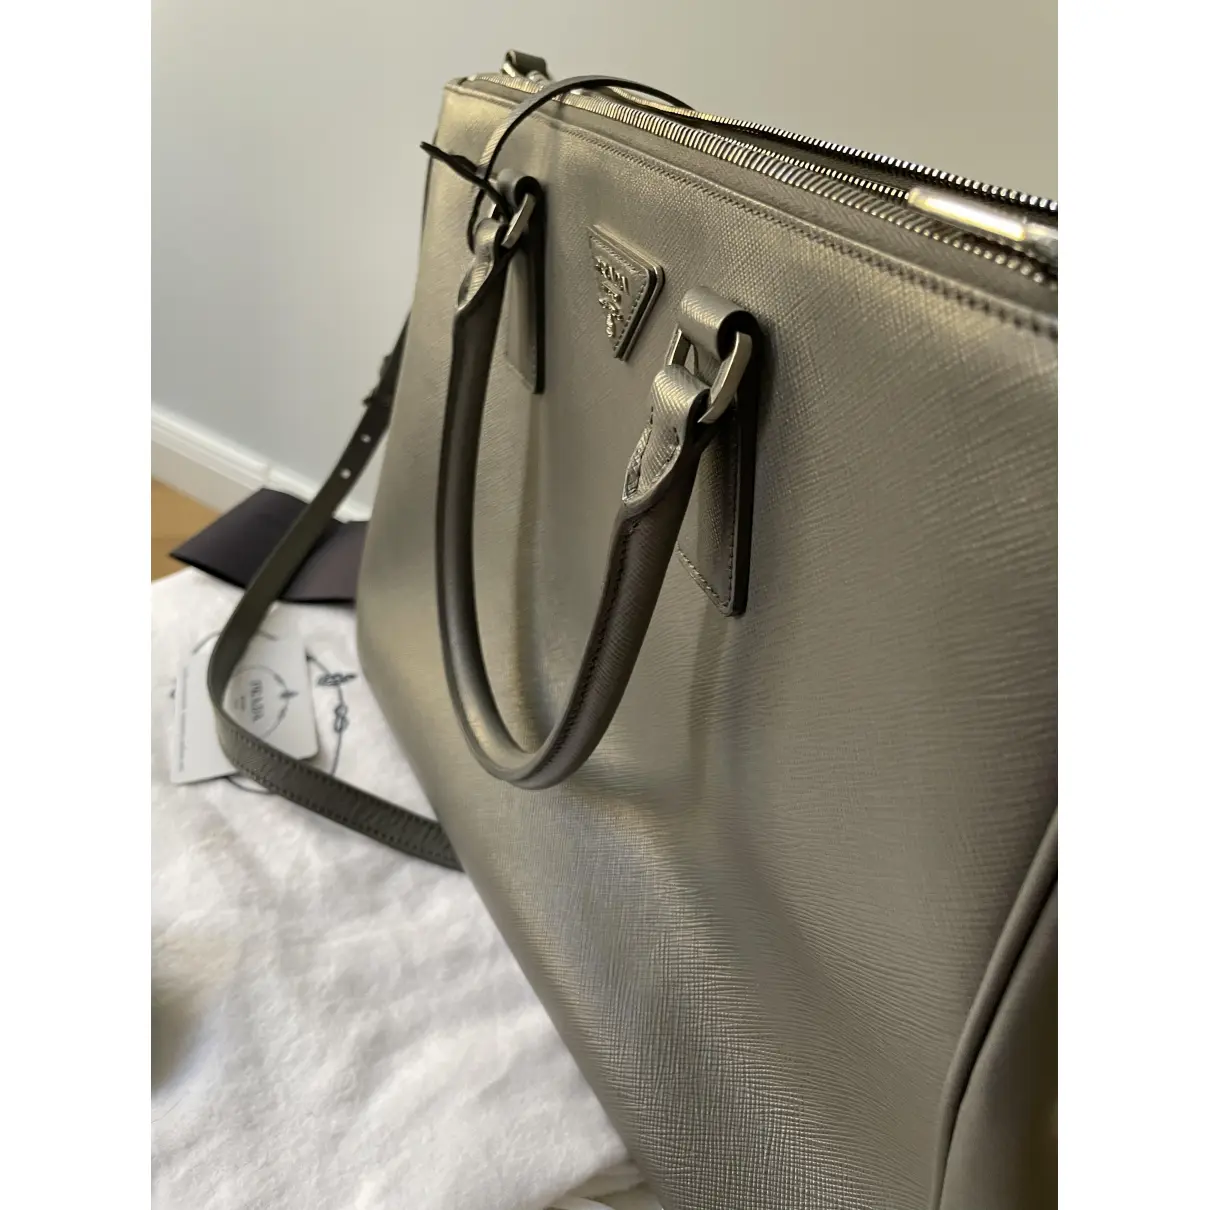 Buy Prada Galleria leather handbag online